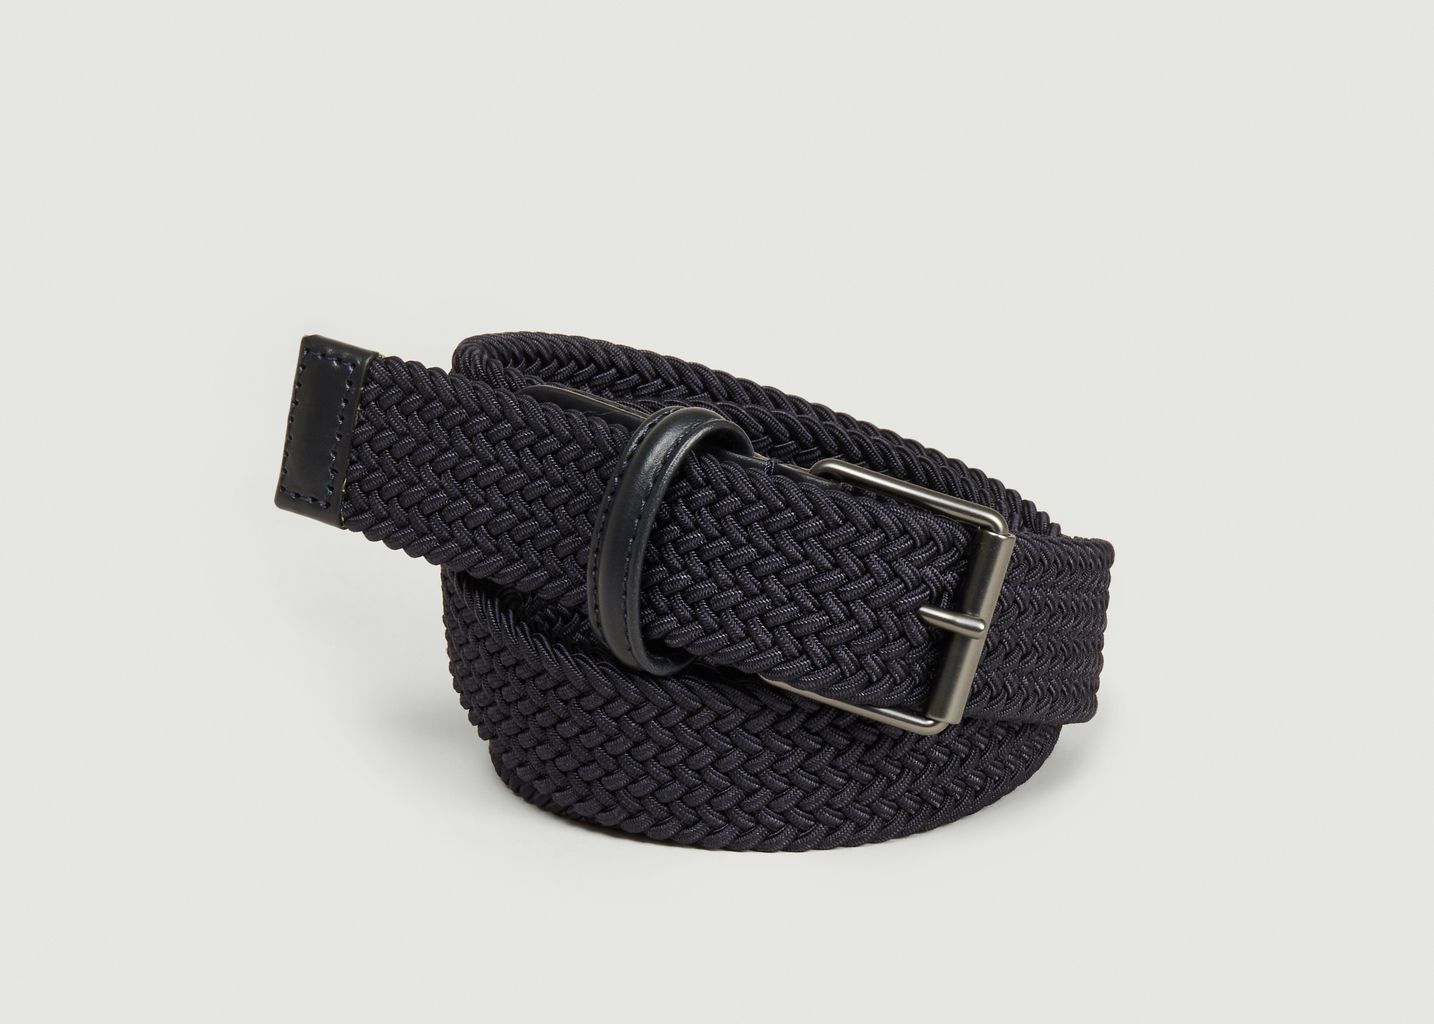 Anderson's Braided Belt